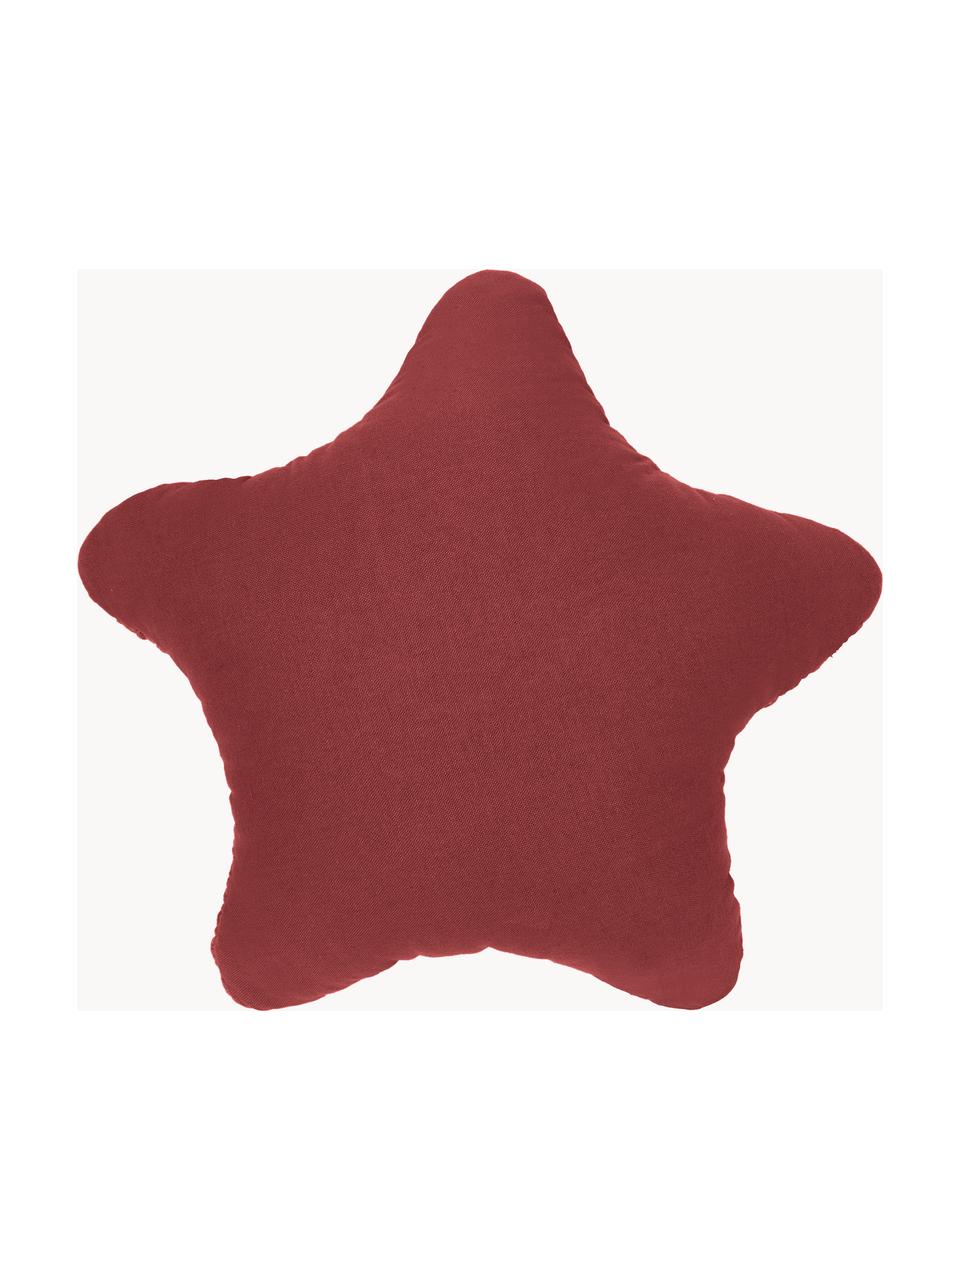 Cojín de punto grueso Sparkle, con relleno, Funda: 100% algodón, Rojo vino, An 45 x L 45 cm